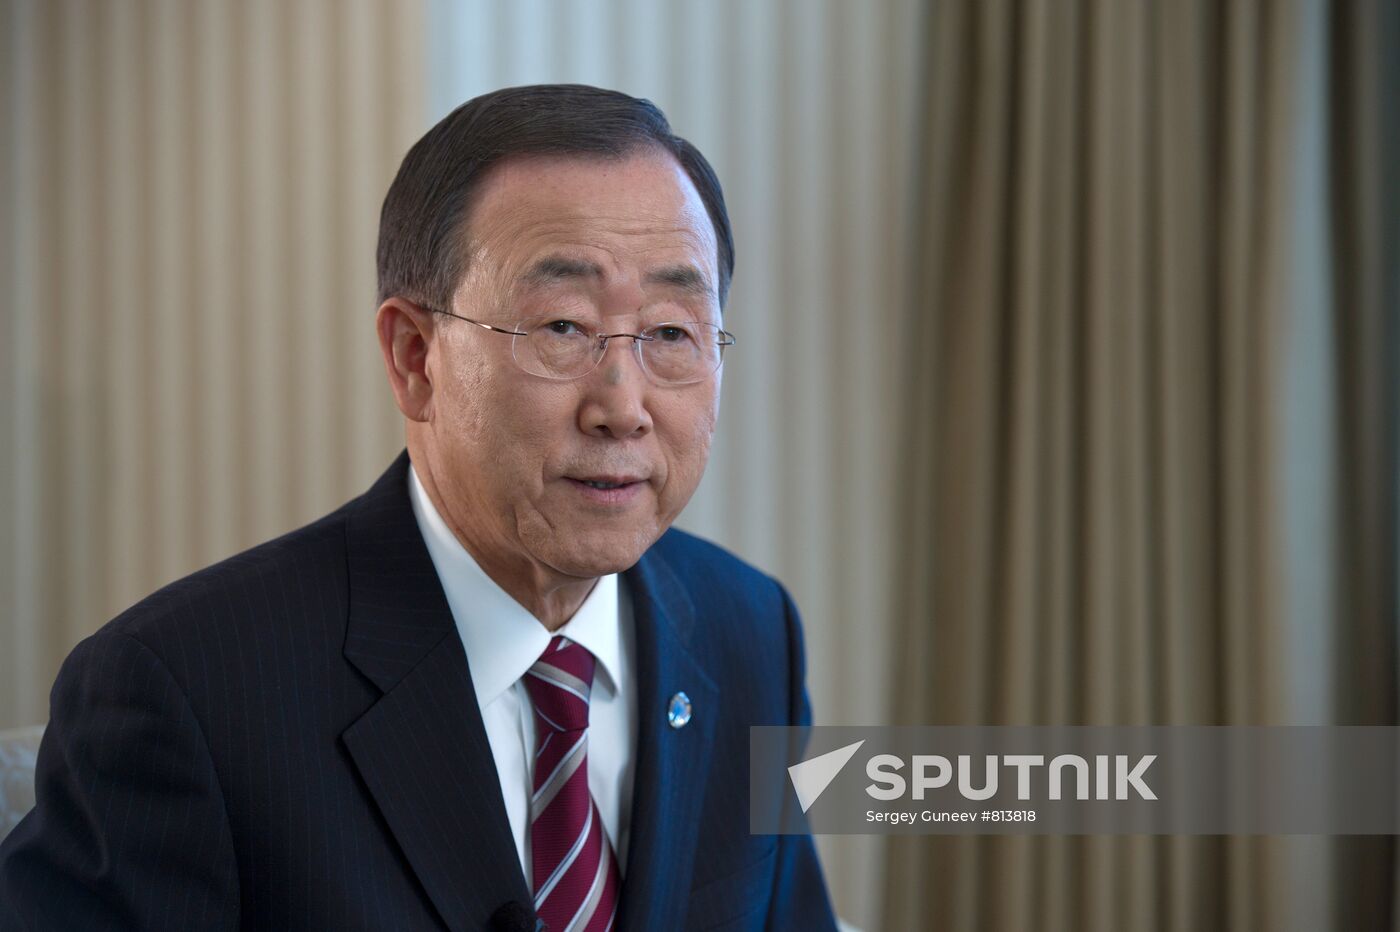 United Nations Secretary General Ban Ki Moon Gives Interview Sputnik Mediabank 